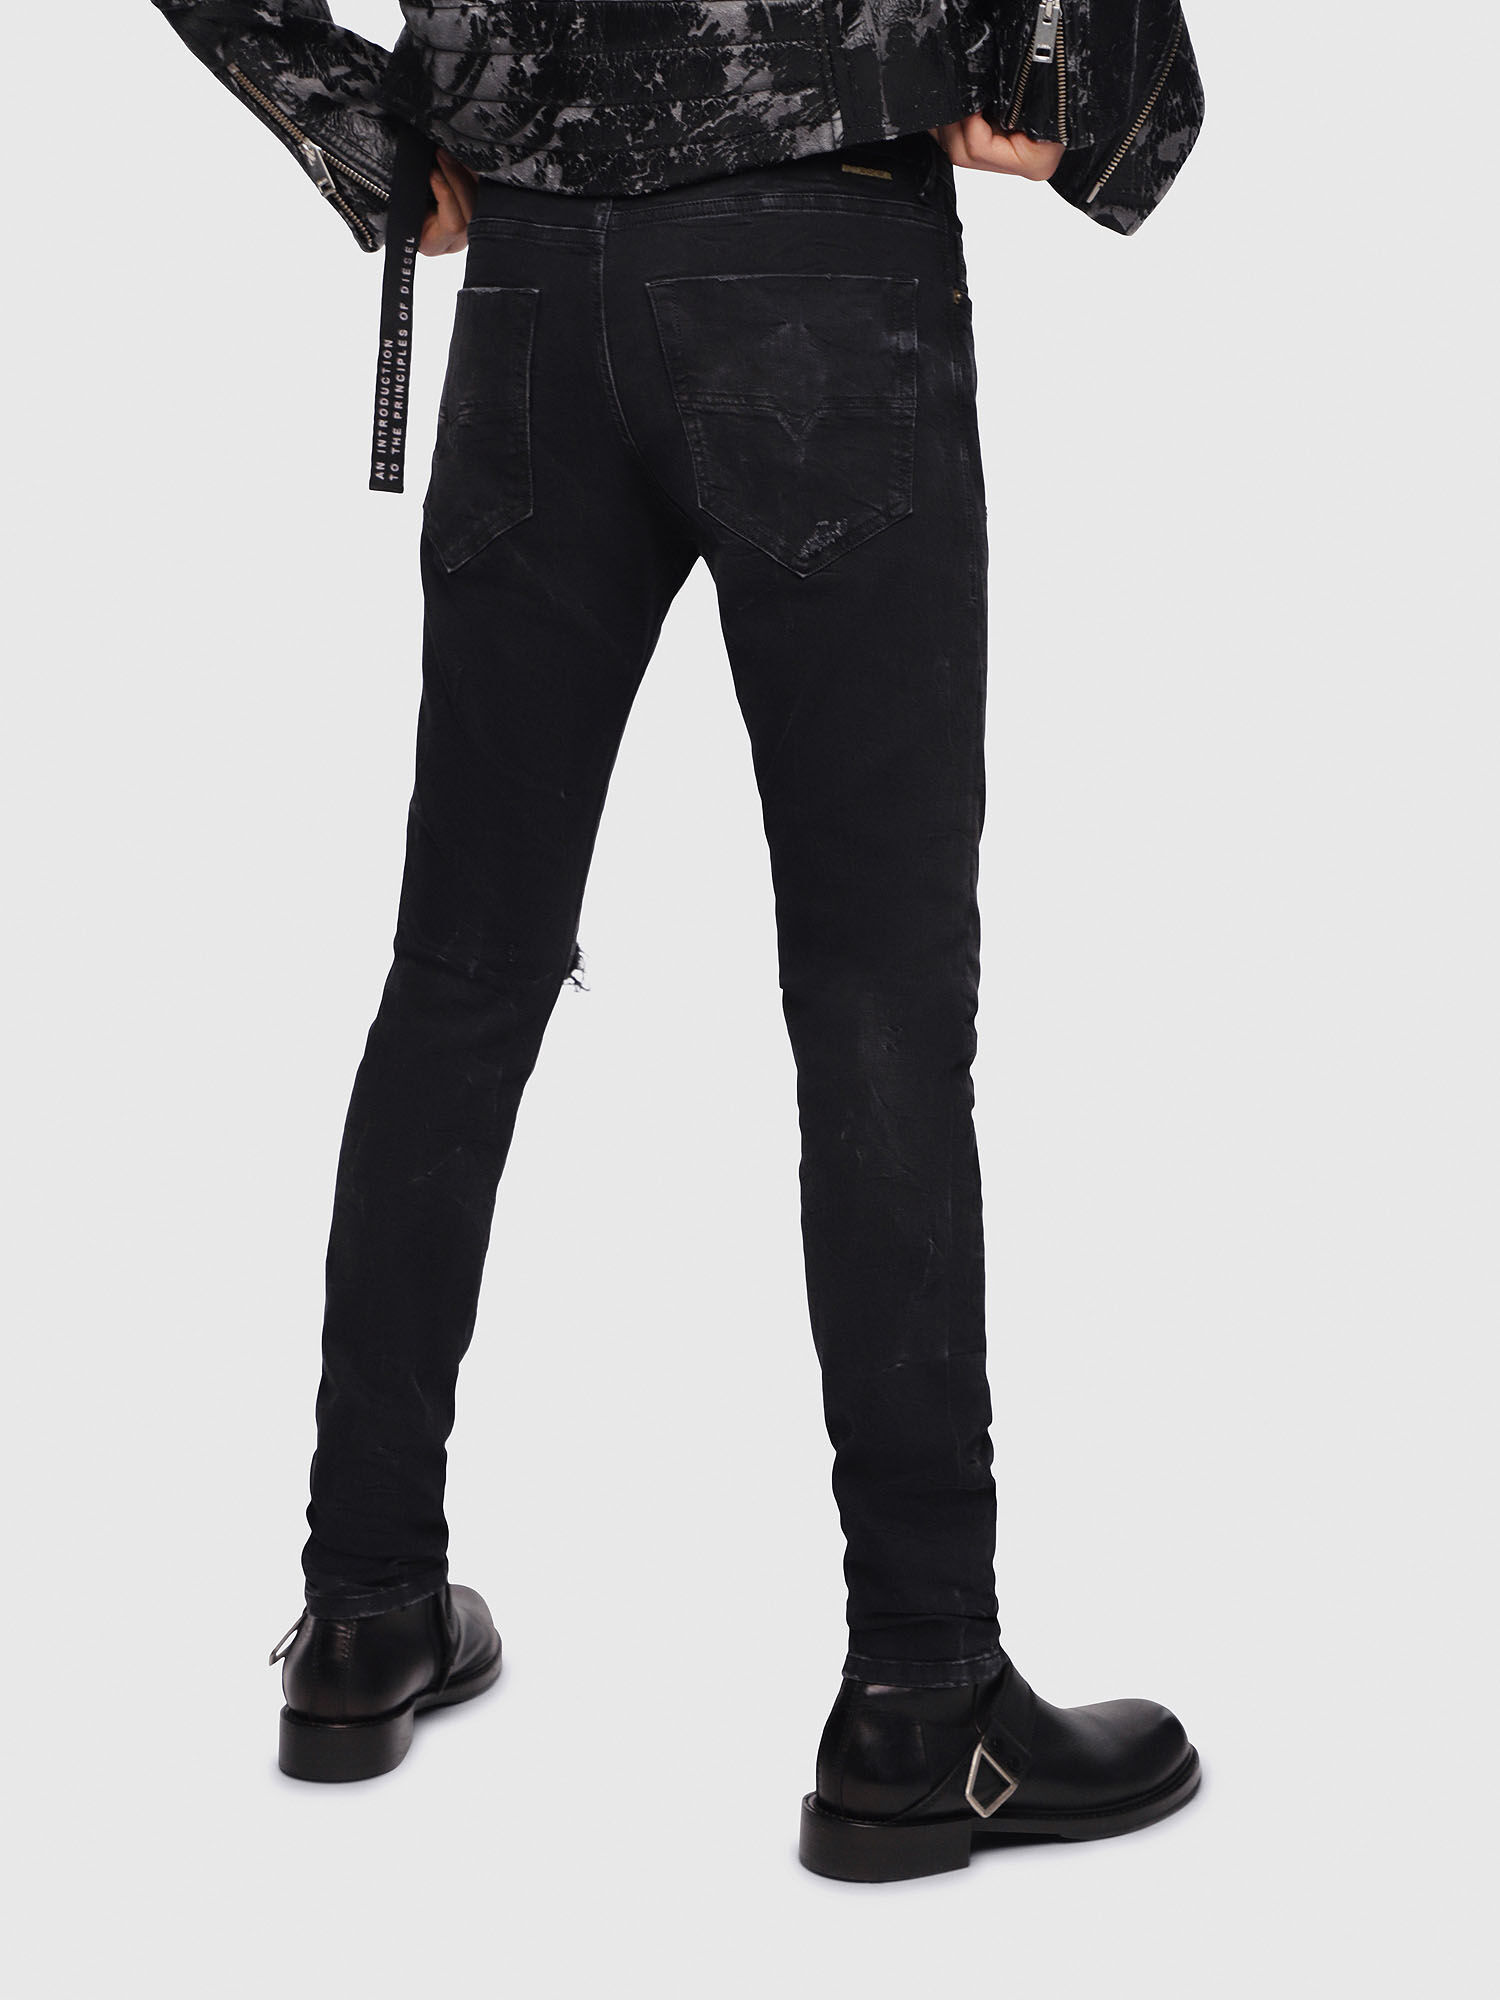 Tepphar Slim Jeans 069DV: Black/Dark Grey Wash, Destroyed, Stretch